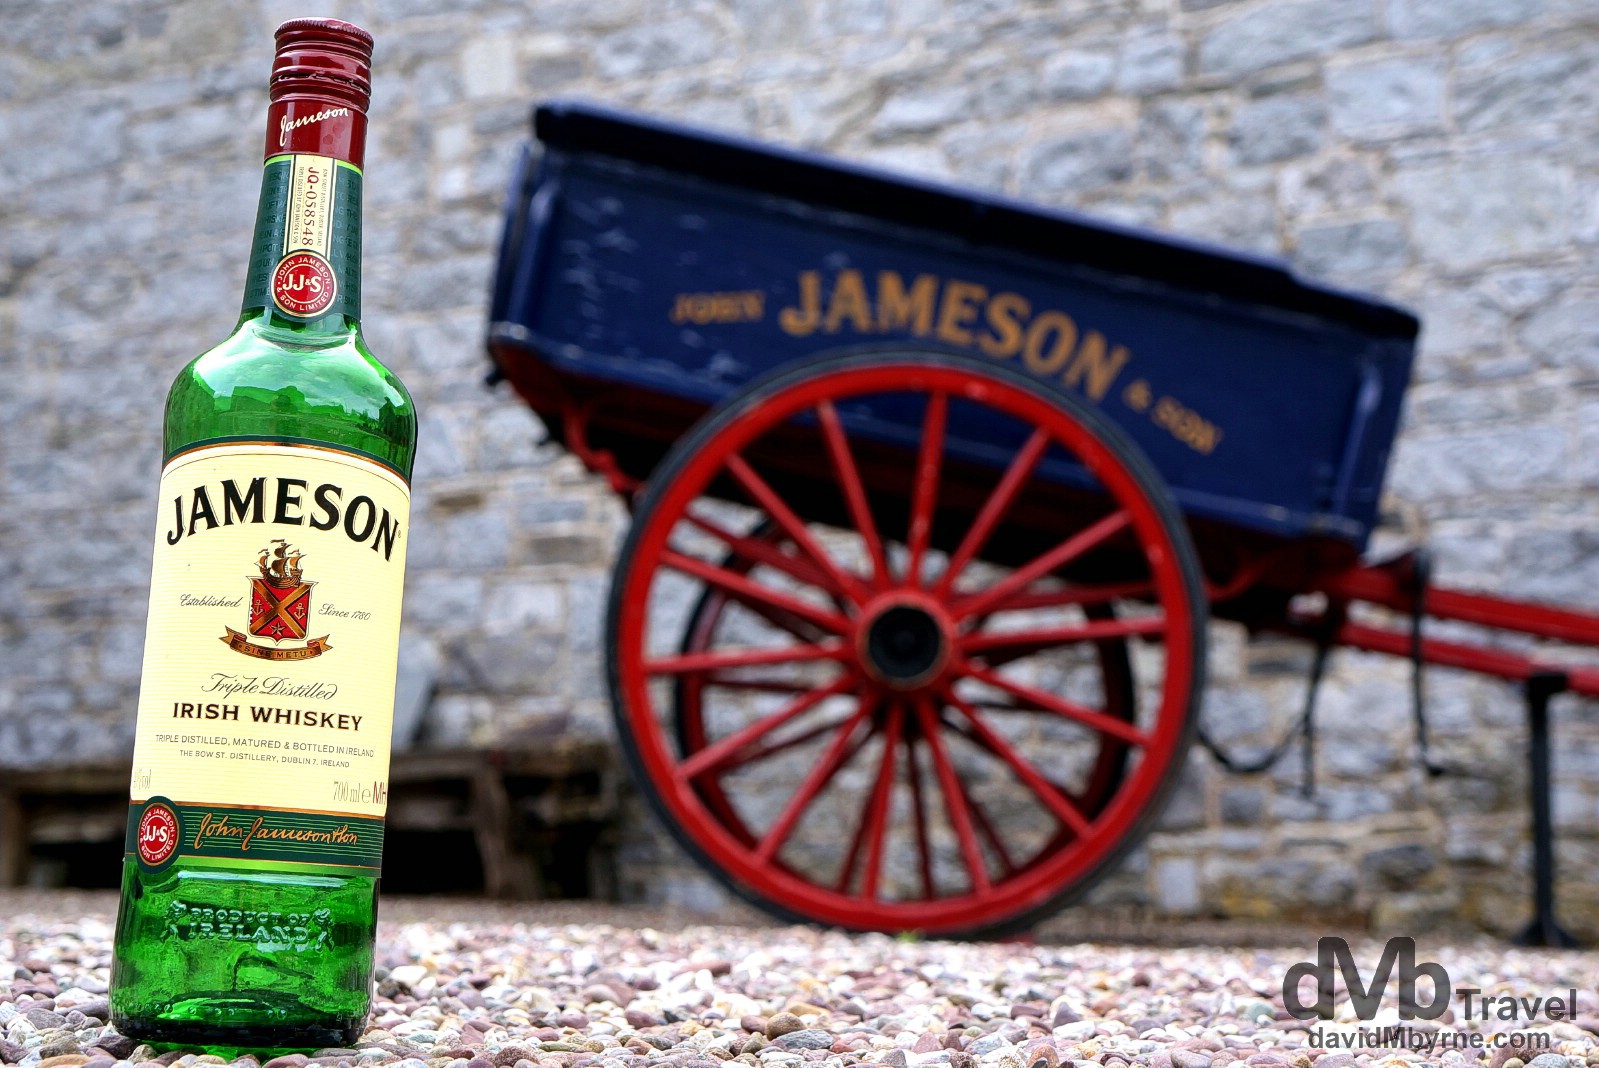 Jameson Distillery, Midleton, Co. Cork, Ireland. August 30, 2014.